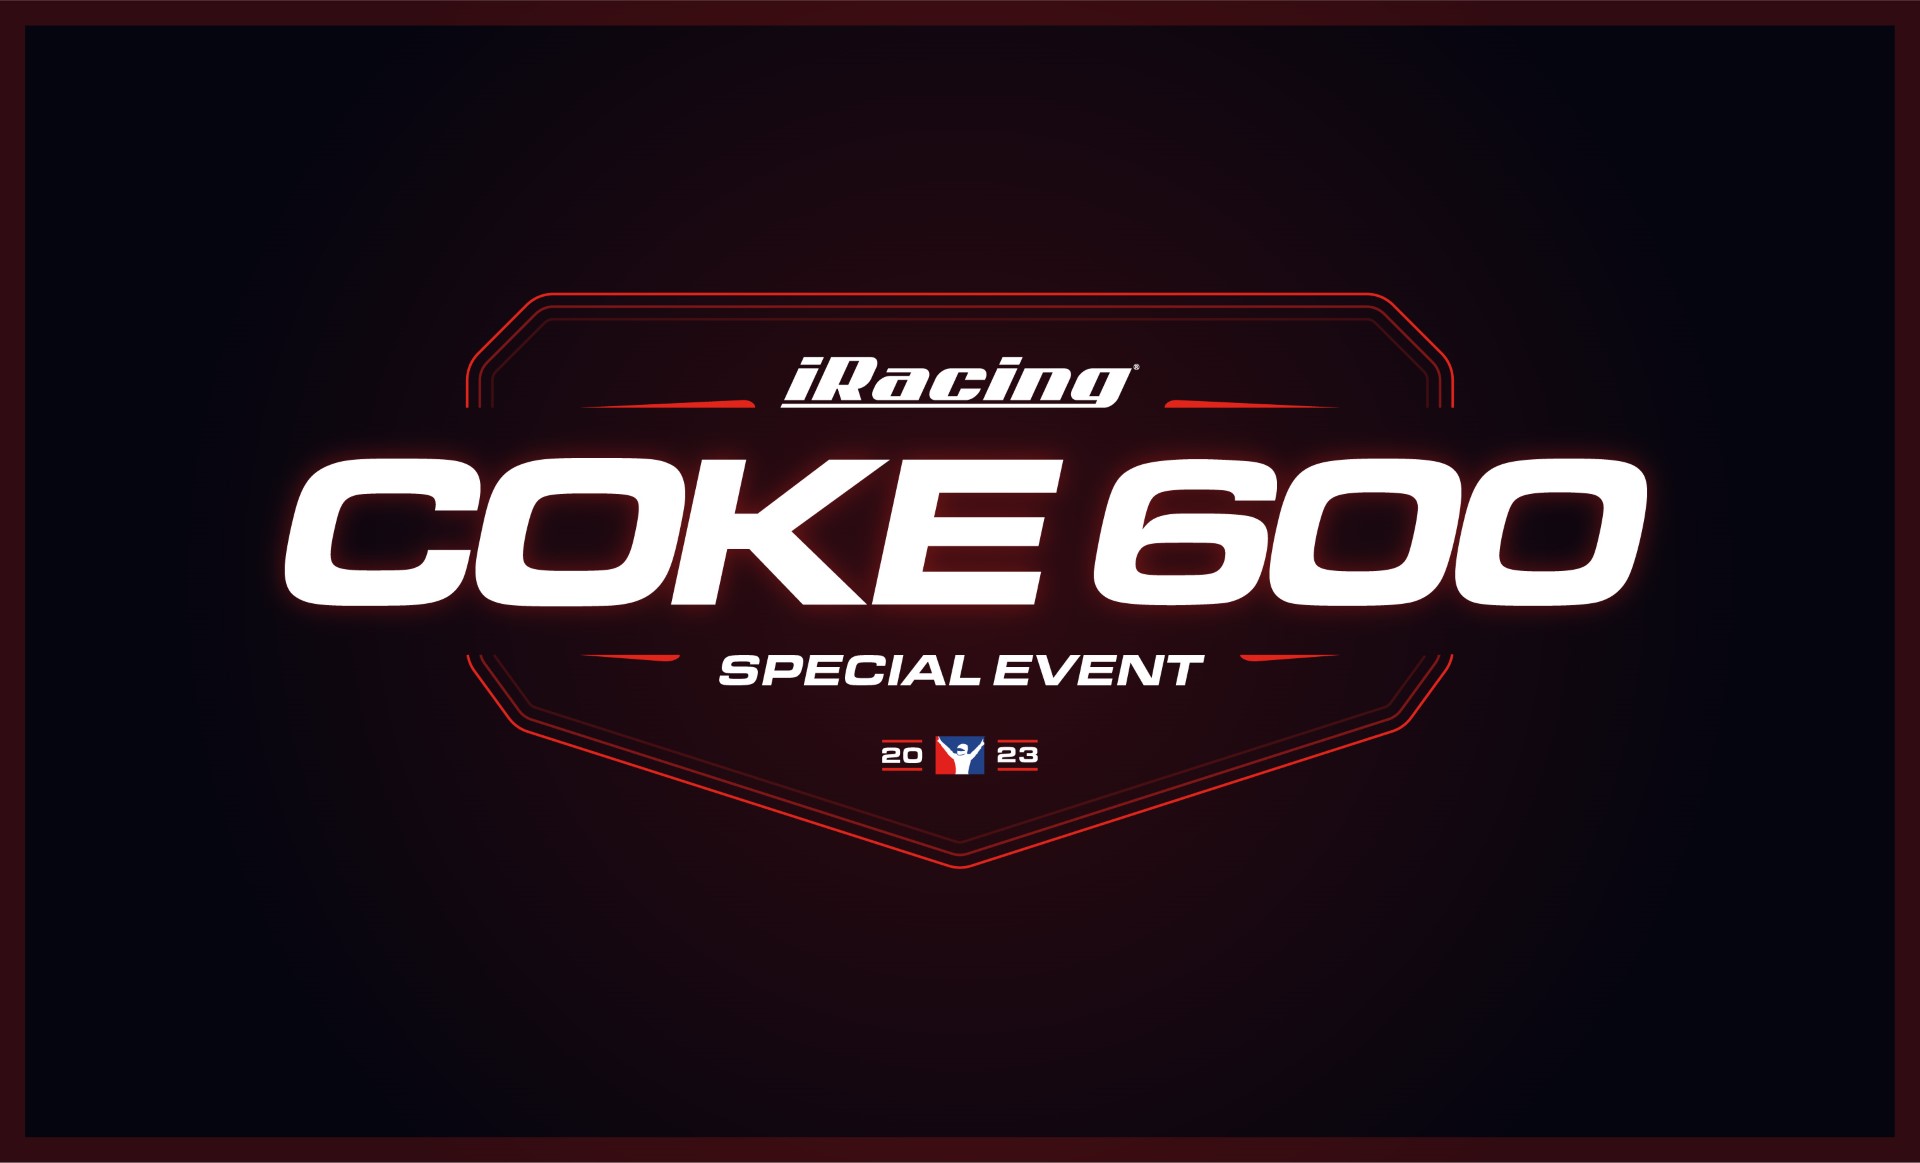 iRacing Special Event NASCAR COKE 600